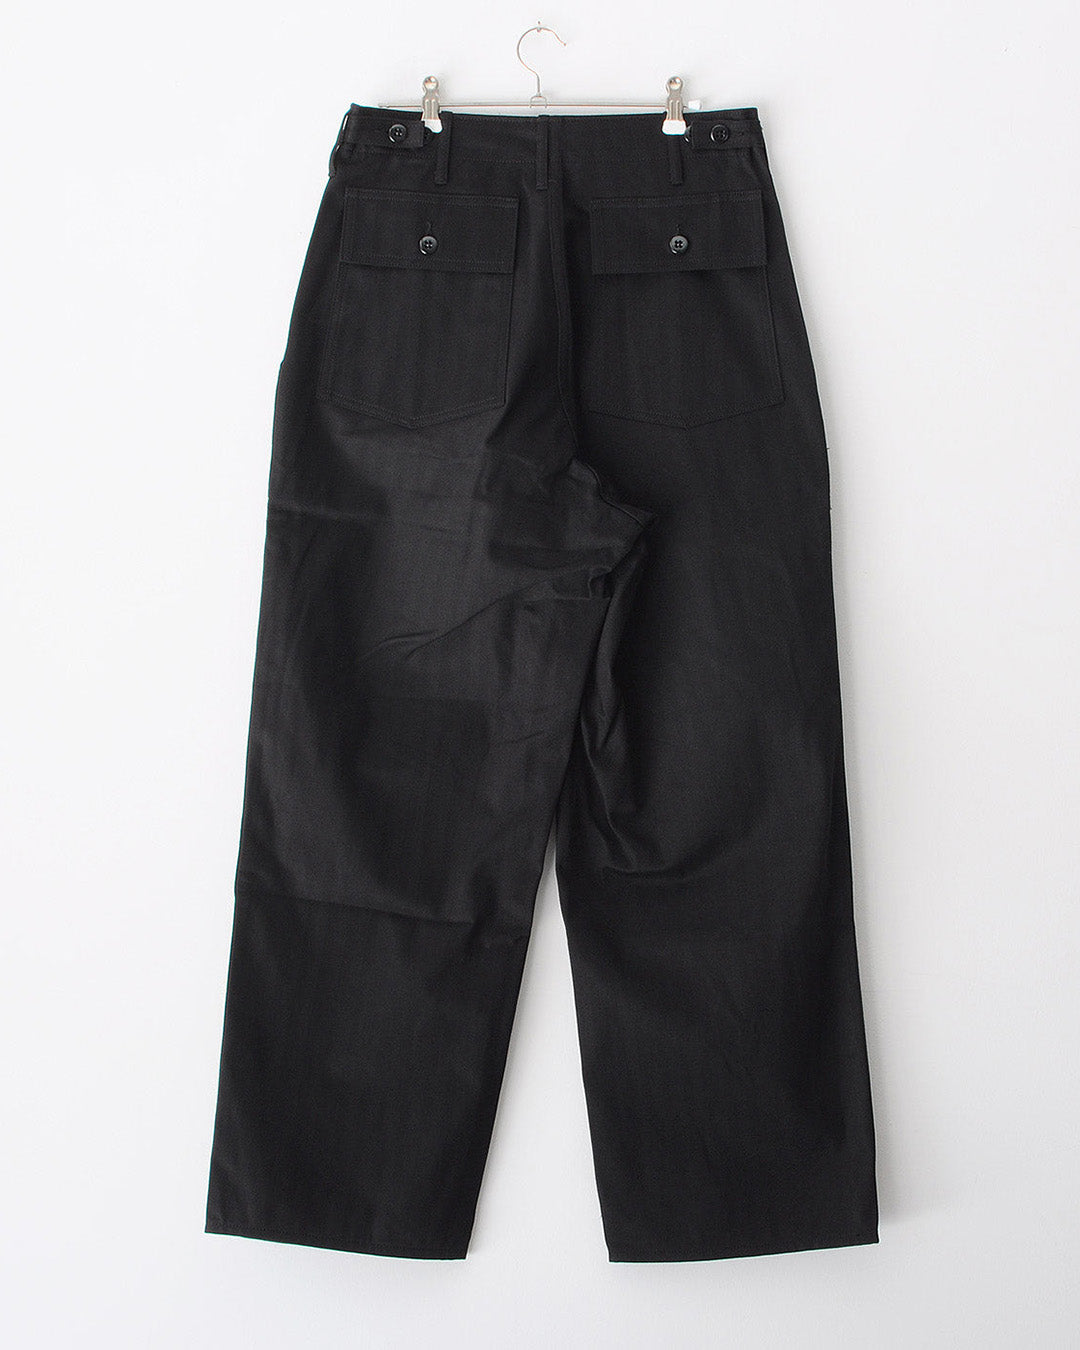 TUKI baker pants / black / herringbone twill / size1,2